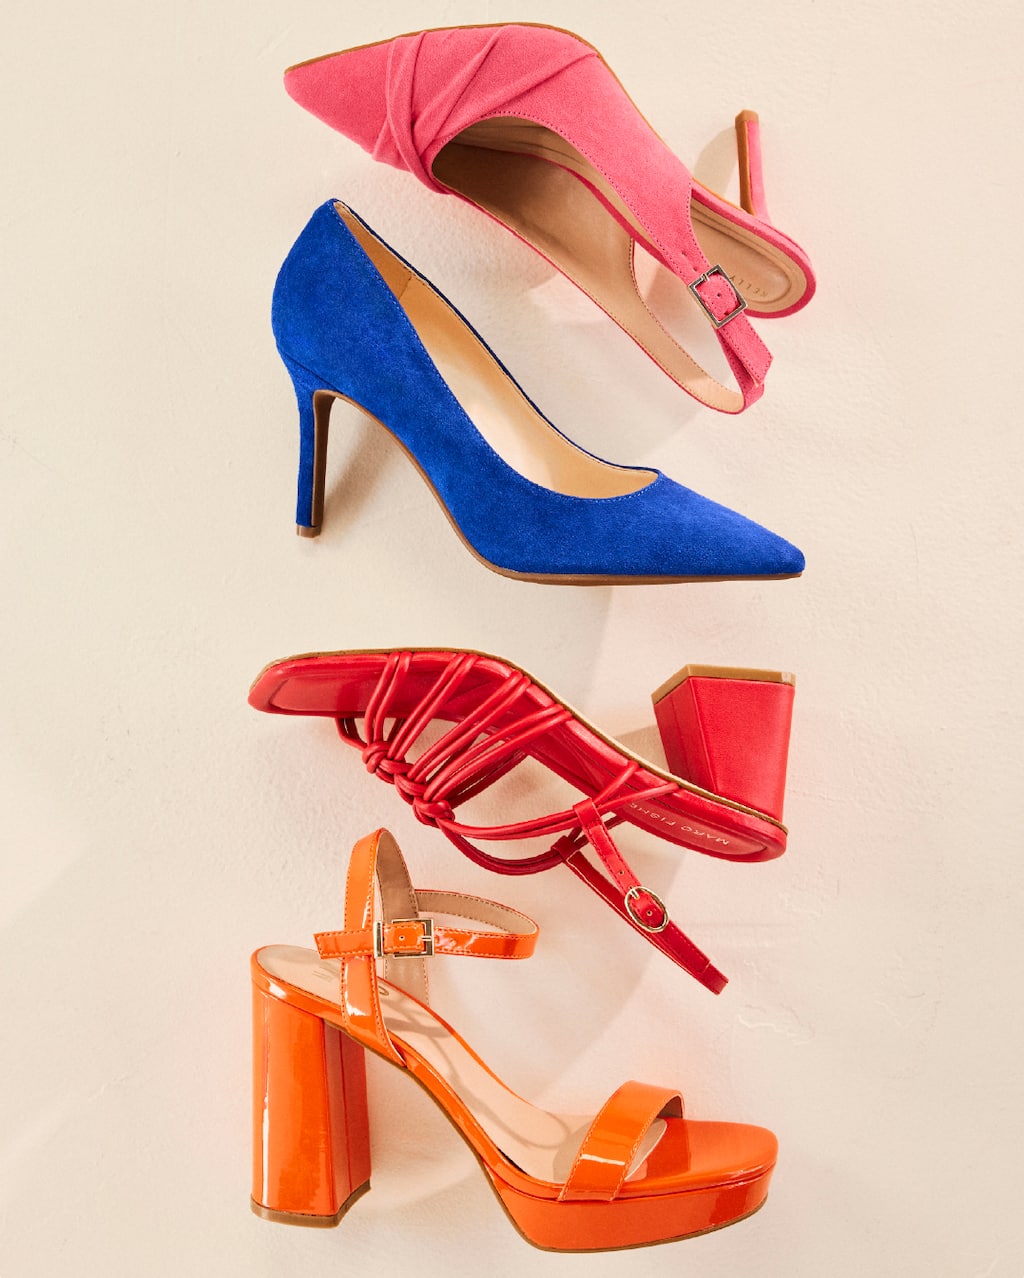 DSW Heels: Shop Trendy Heels for Every Occasion